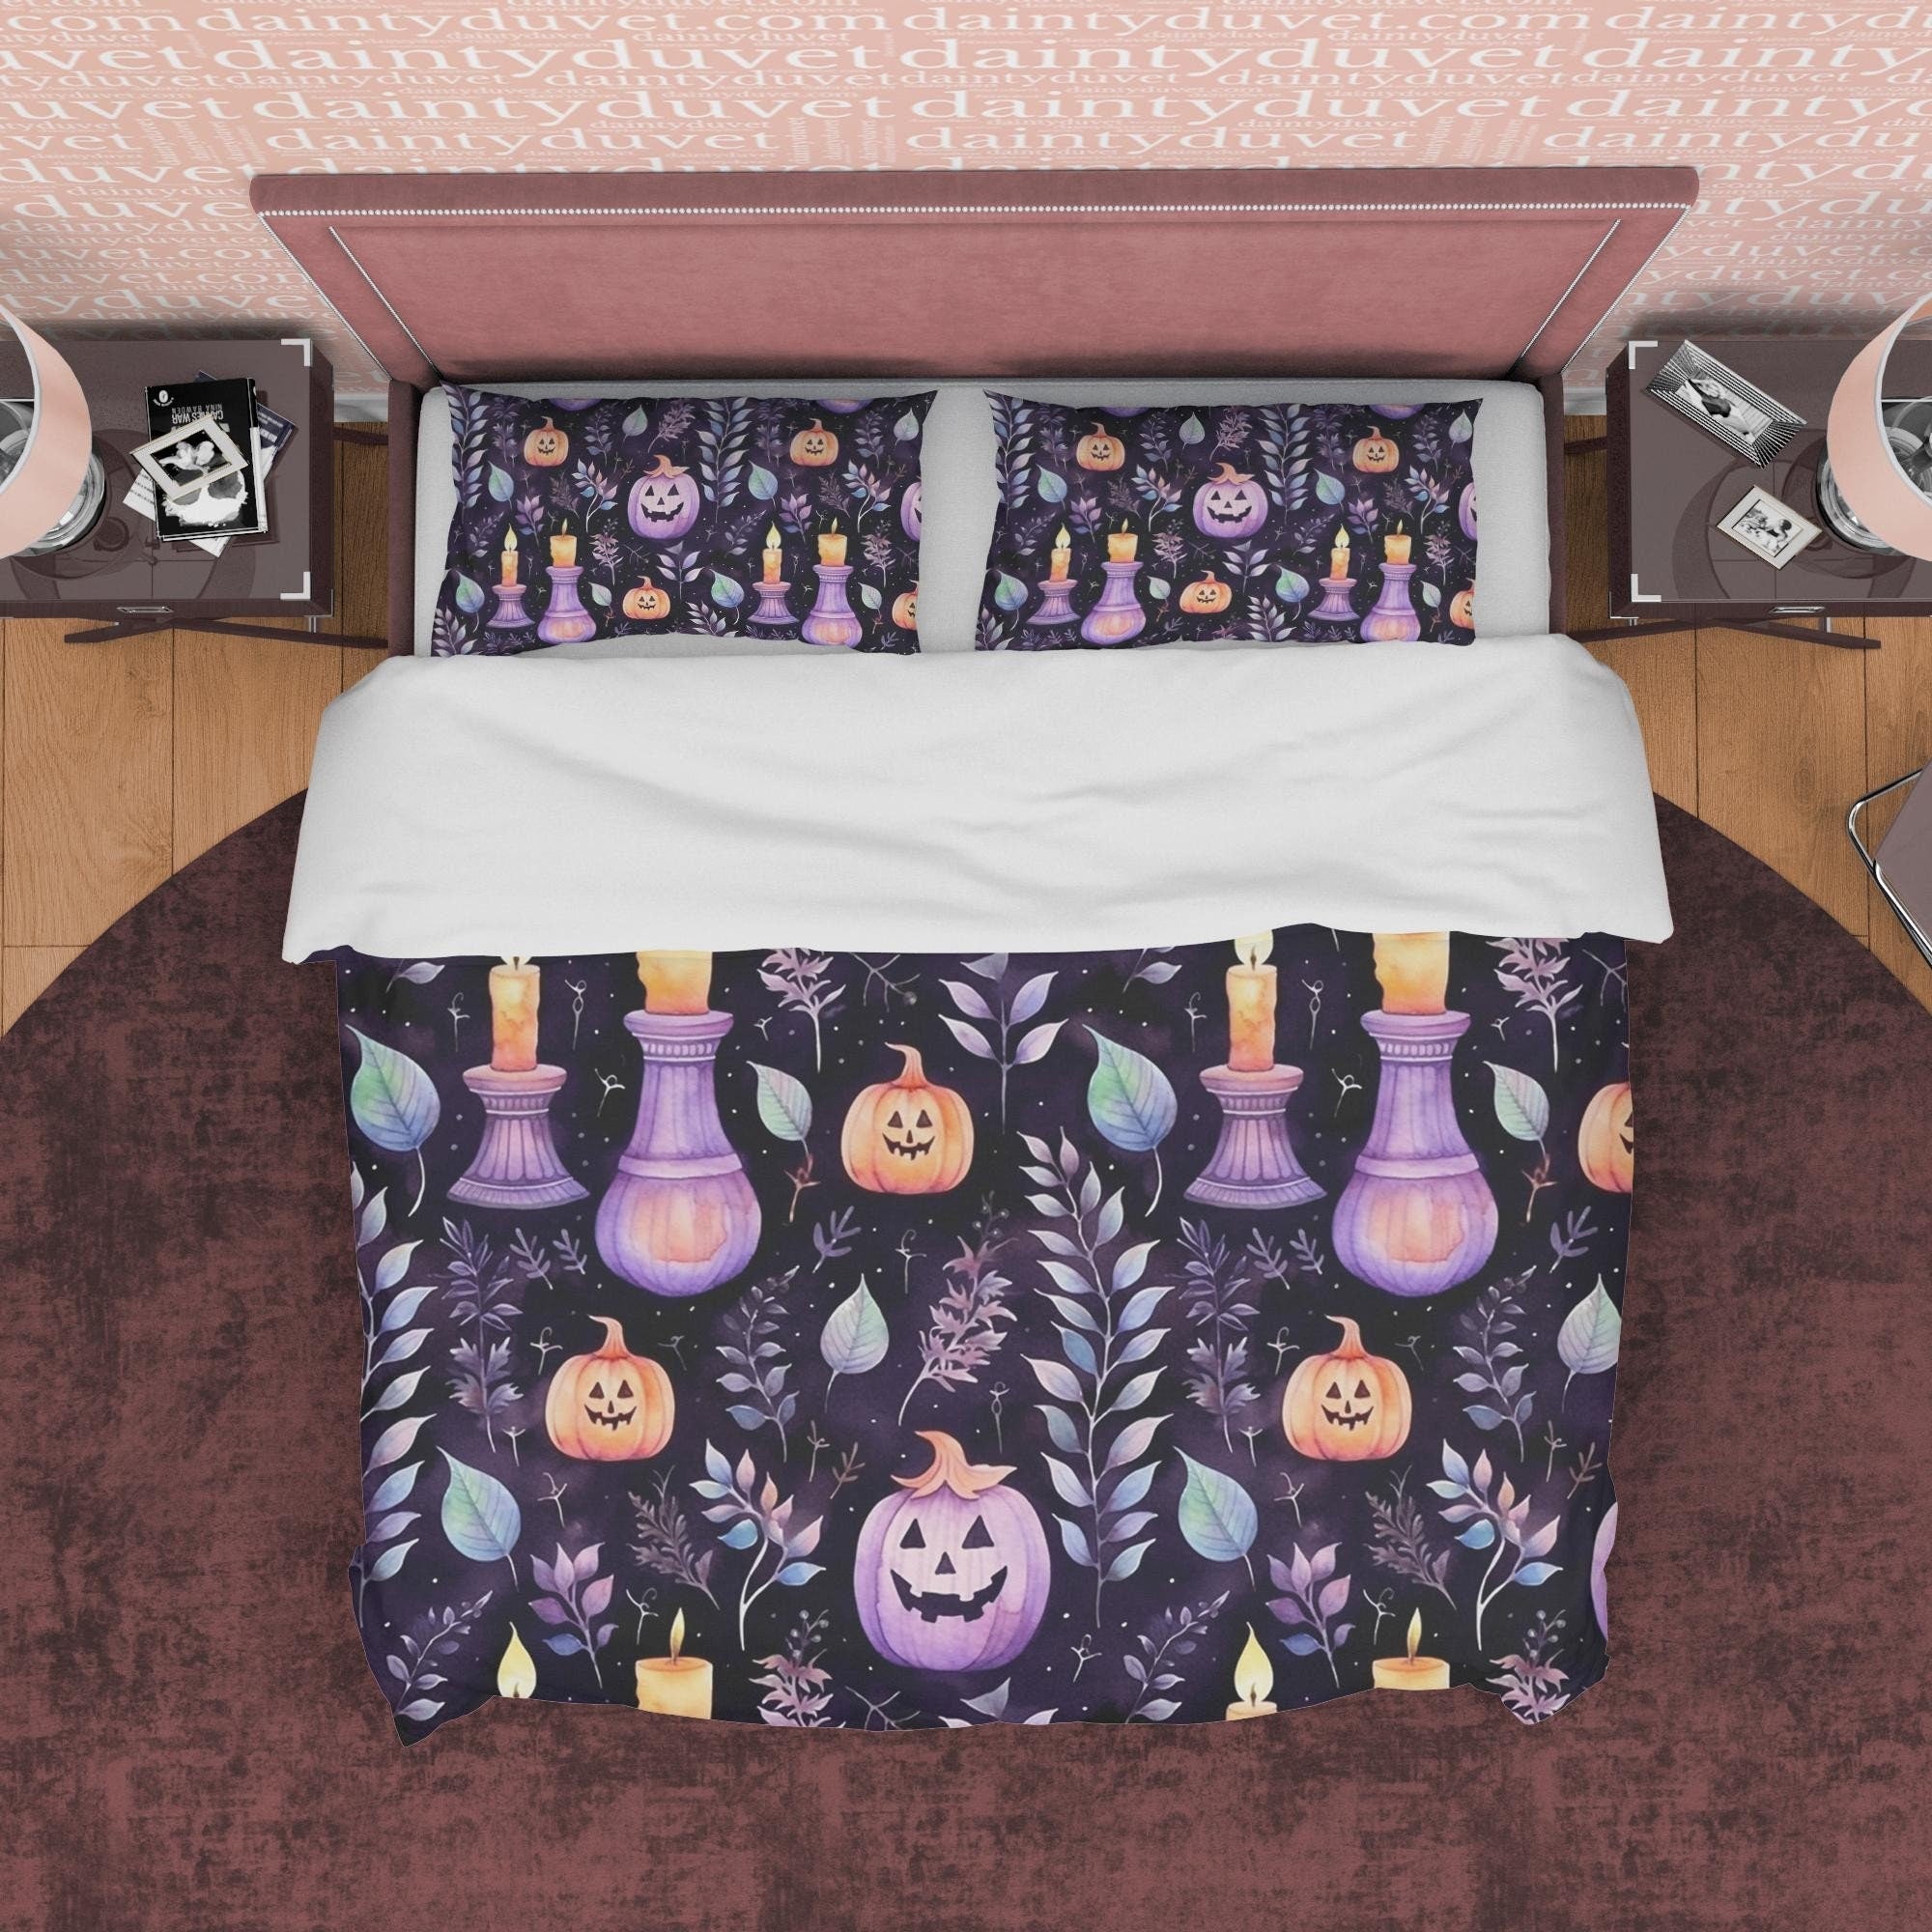 Colorful Spooky Bedding Purple Duvet Cover Set, Pumpkin Halloween Room Decor, Autumn Bedspread, Dorm Quilt Cover, Comforter Bed Cover